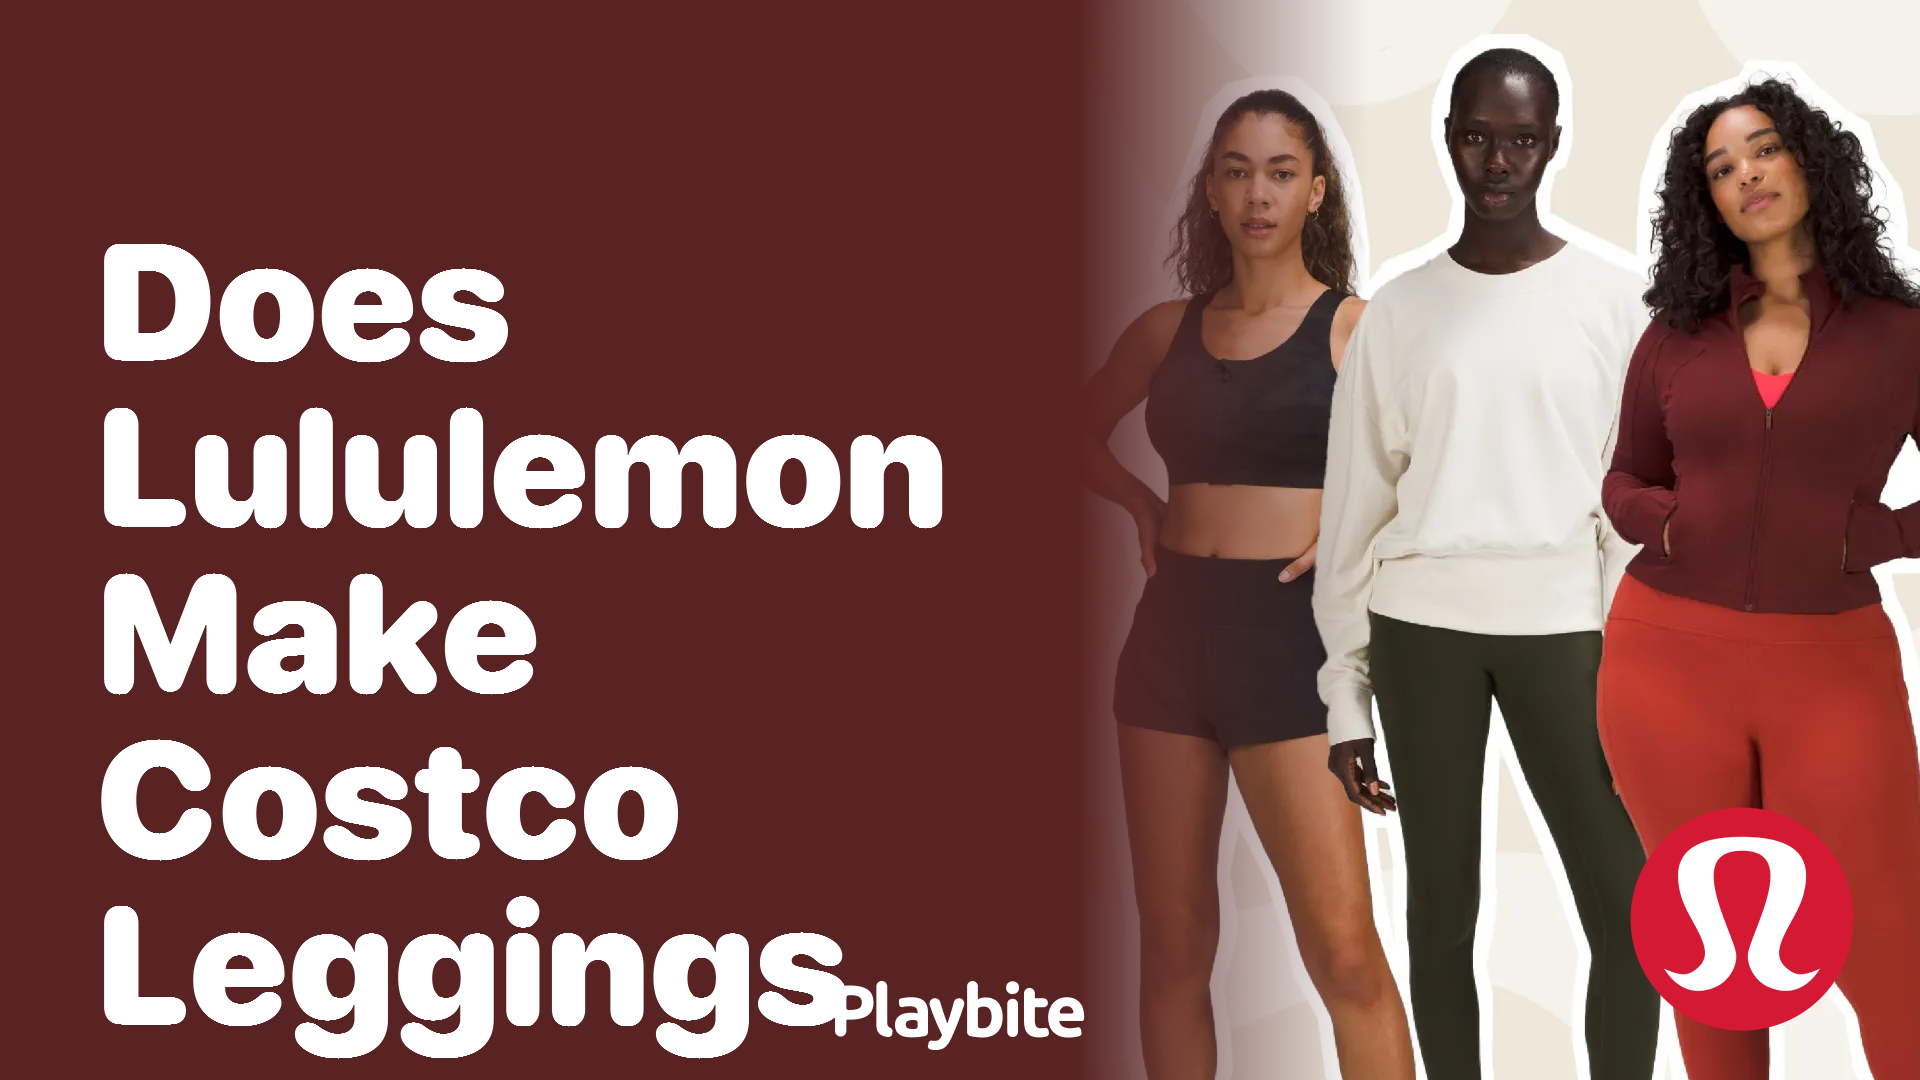 Does Lululemon Make Costco Leggings? - Playbite